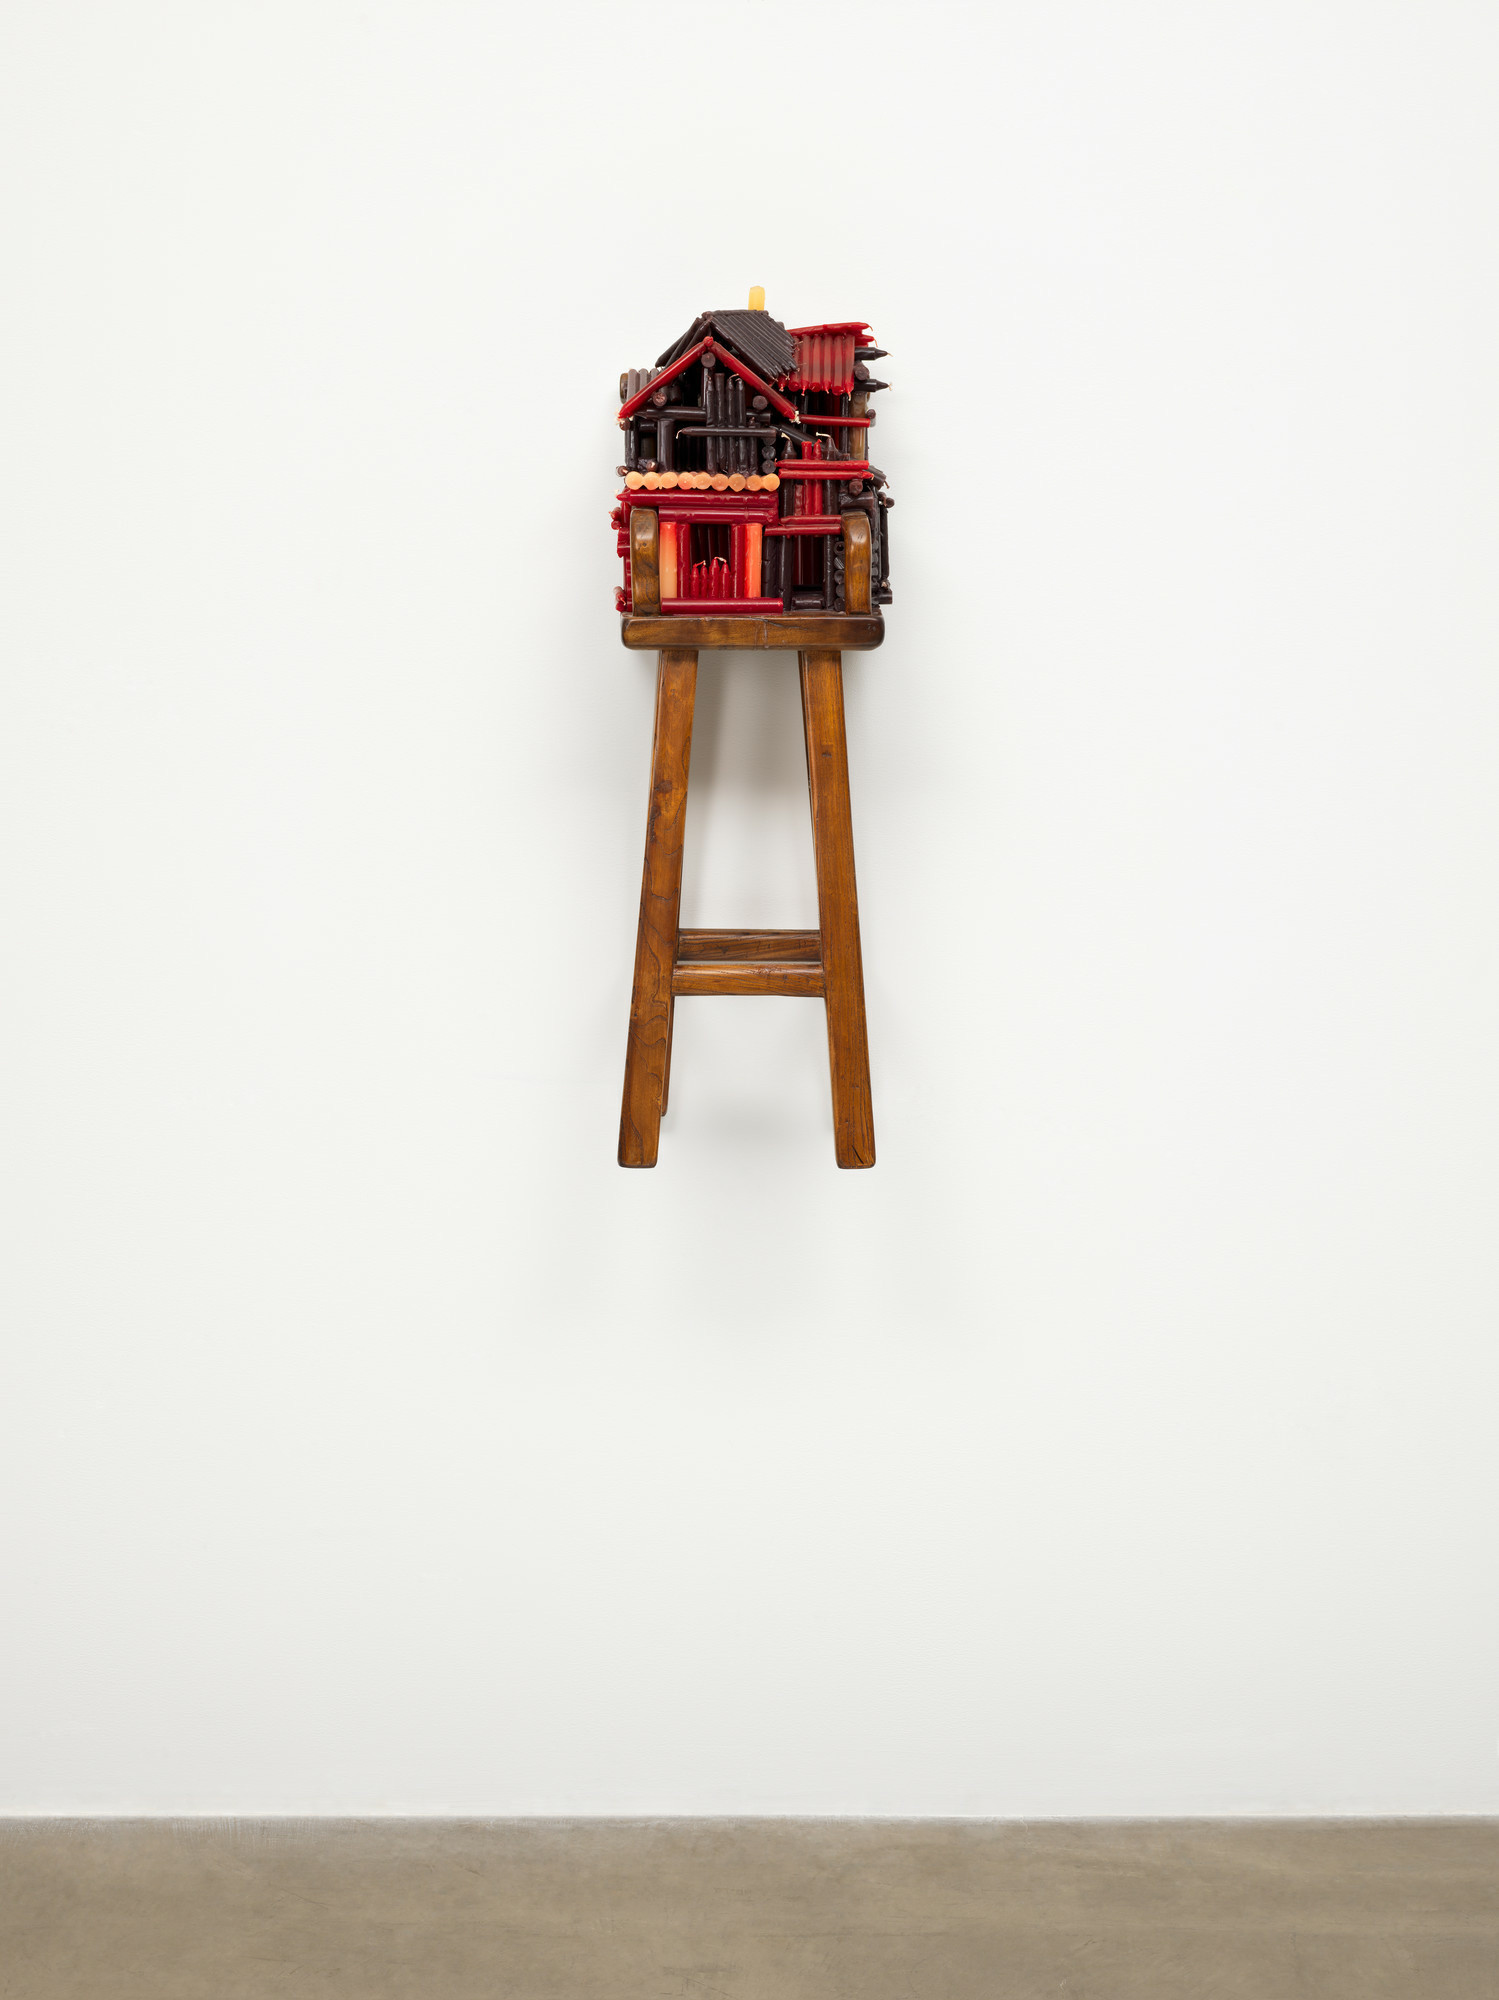 Chen Zhen. Un Village sans frontières. 2000. Wood chair and candles. Gift of Marlene Hess and James D. Zirin. © 2021 Chen Zhen/ Artists Rights Society (ARS), New York